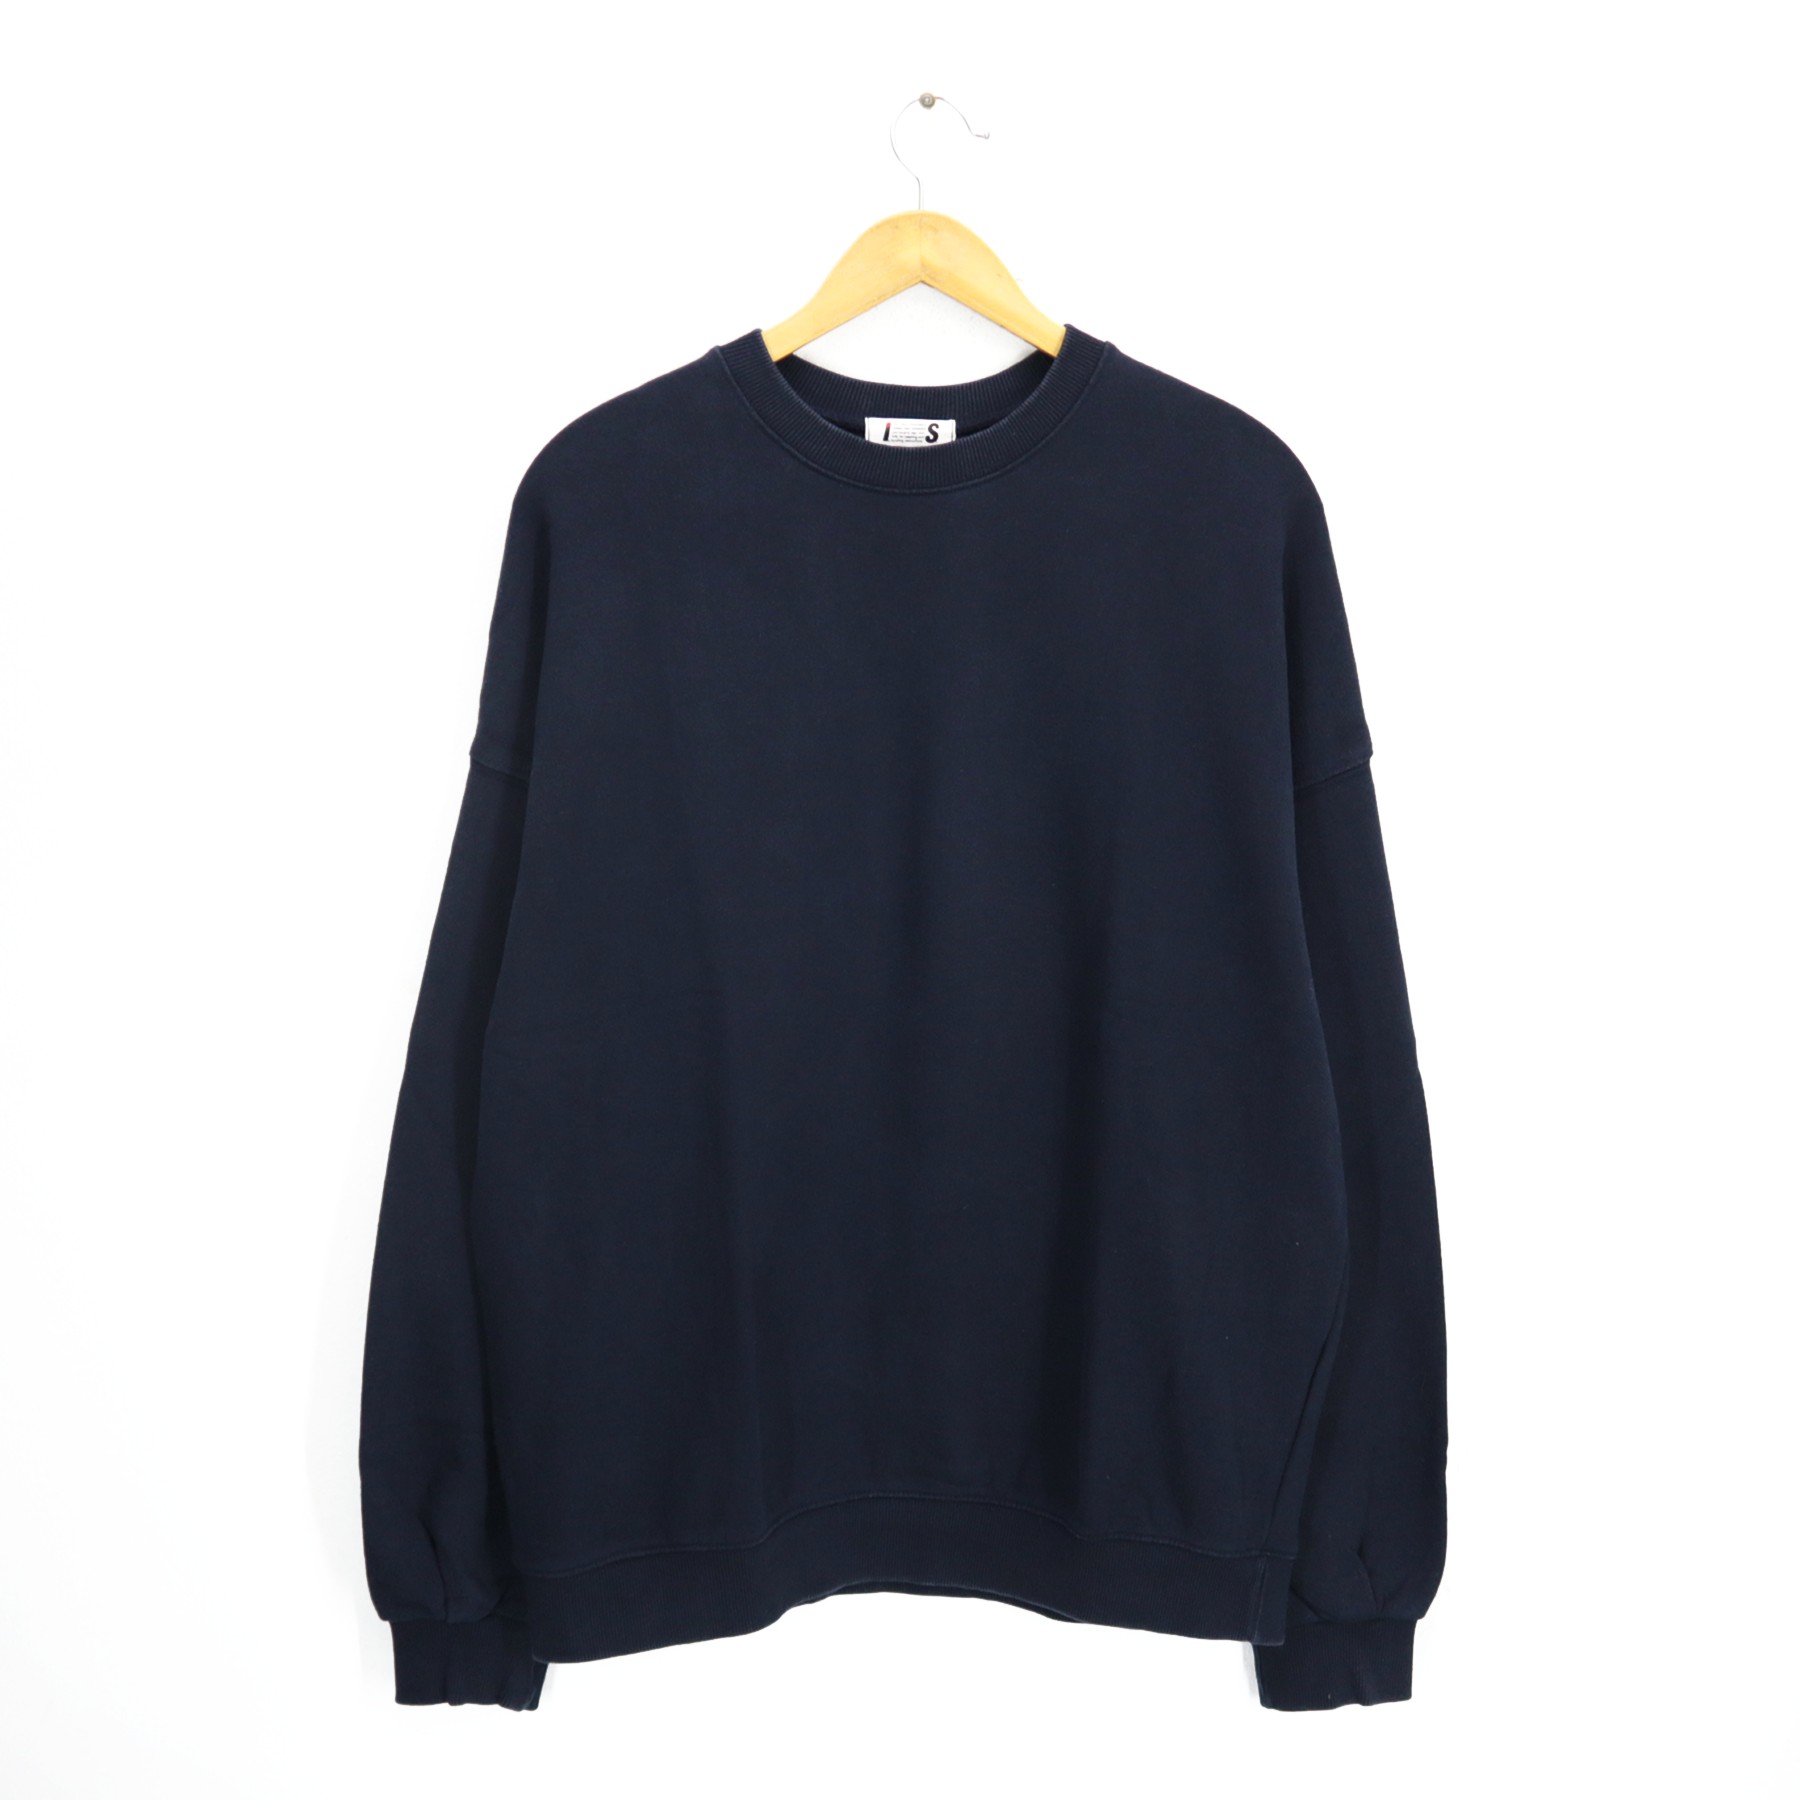 Vintage 90s ISSEY MIYAKE Big IS Logo Sweatshirt Crewneck Pullover Jumper Chisato Tsumori Design - 3